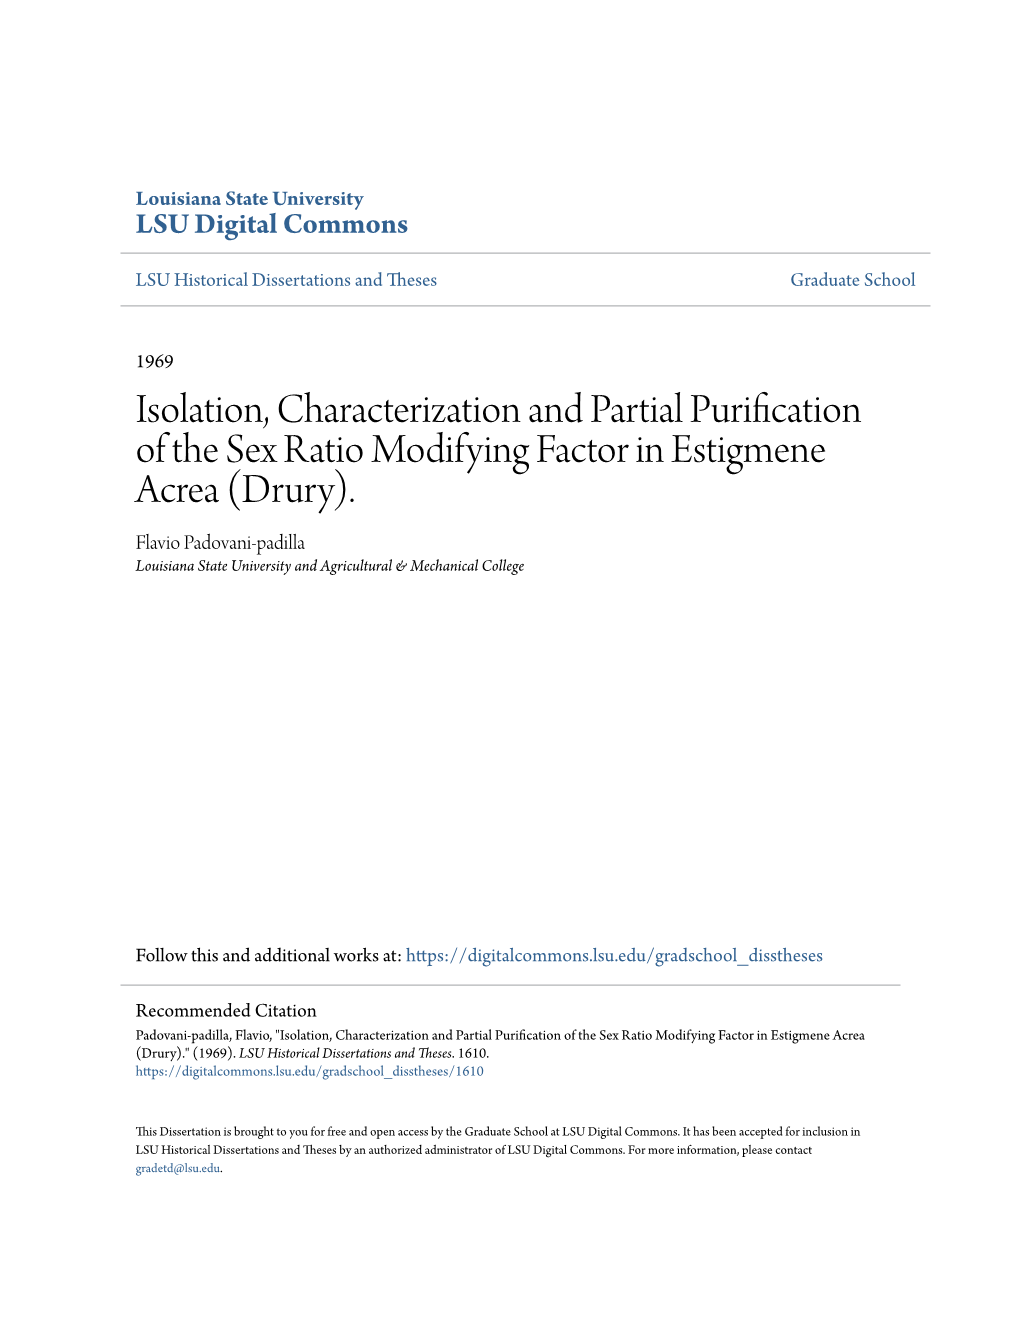 Isolation, Characterization and Partial Purification of the Sex Ratio Modifying Factor in Estigmene Acrea (Drury)